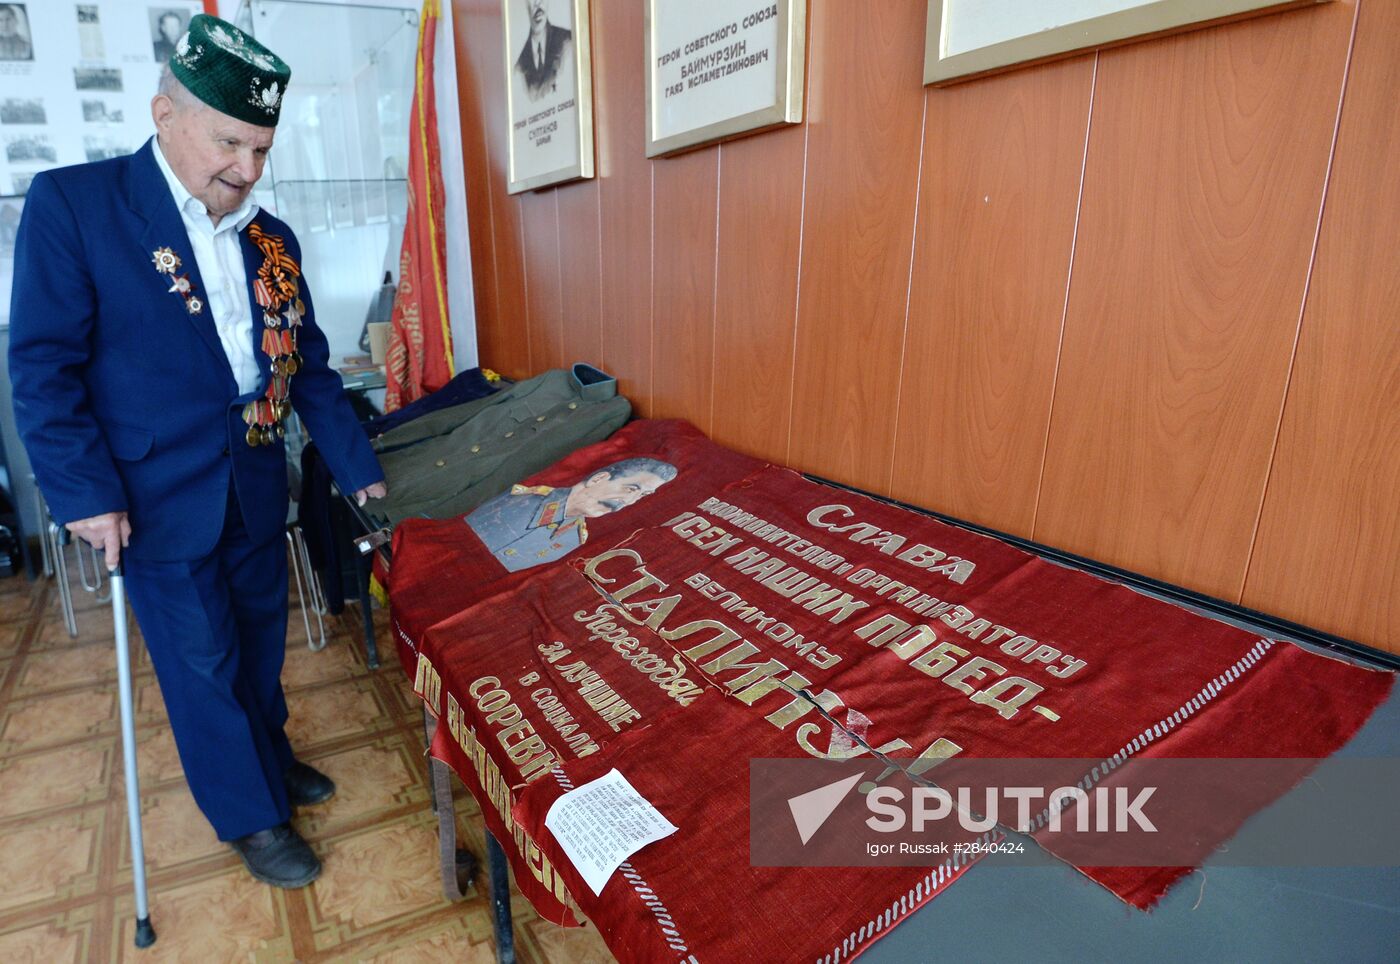 WWII veteran Suganat Yakupov of Chelyabinsk Region